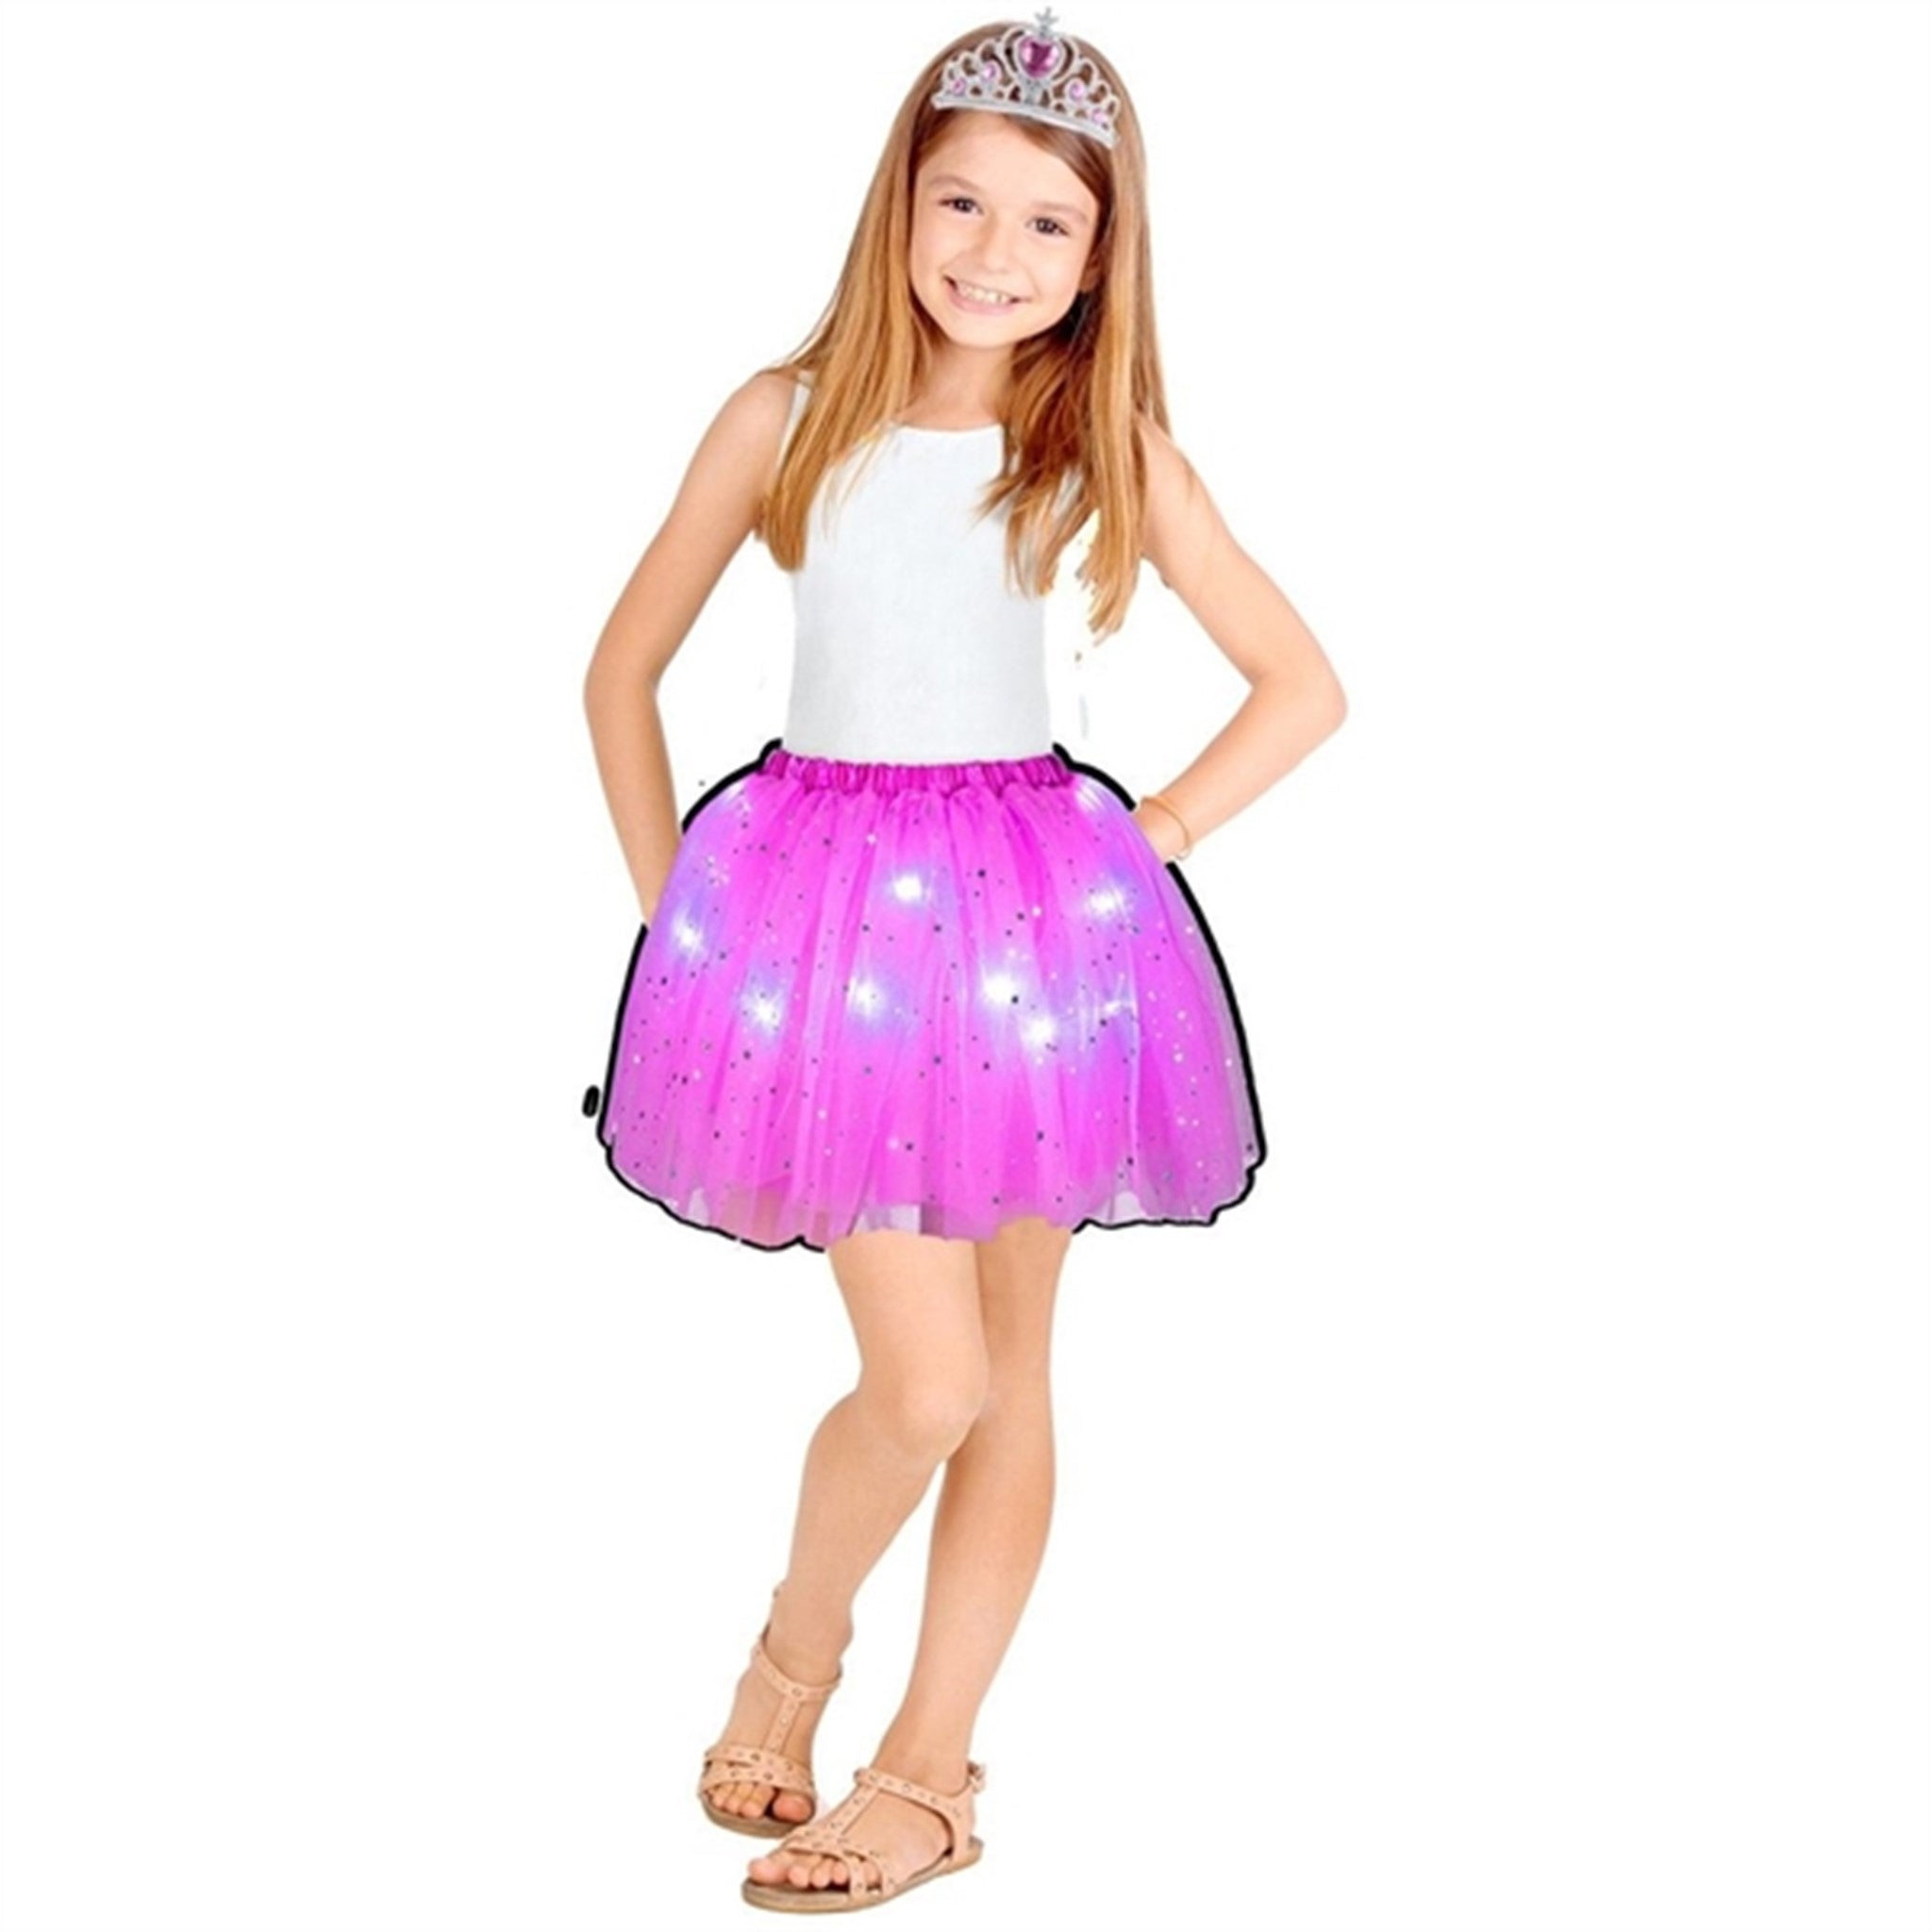 All Dressed Up Tutu Skirt Set - Princess 3